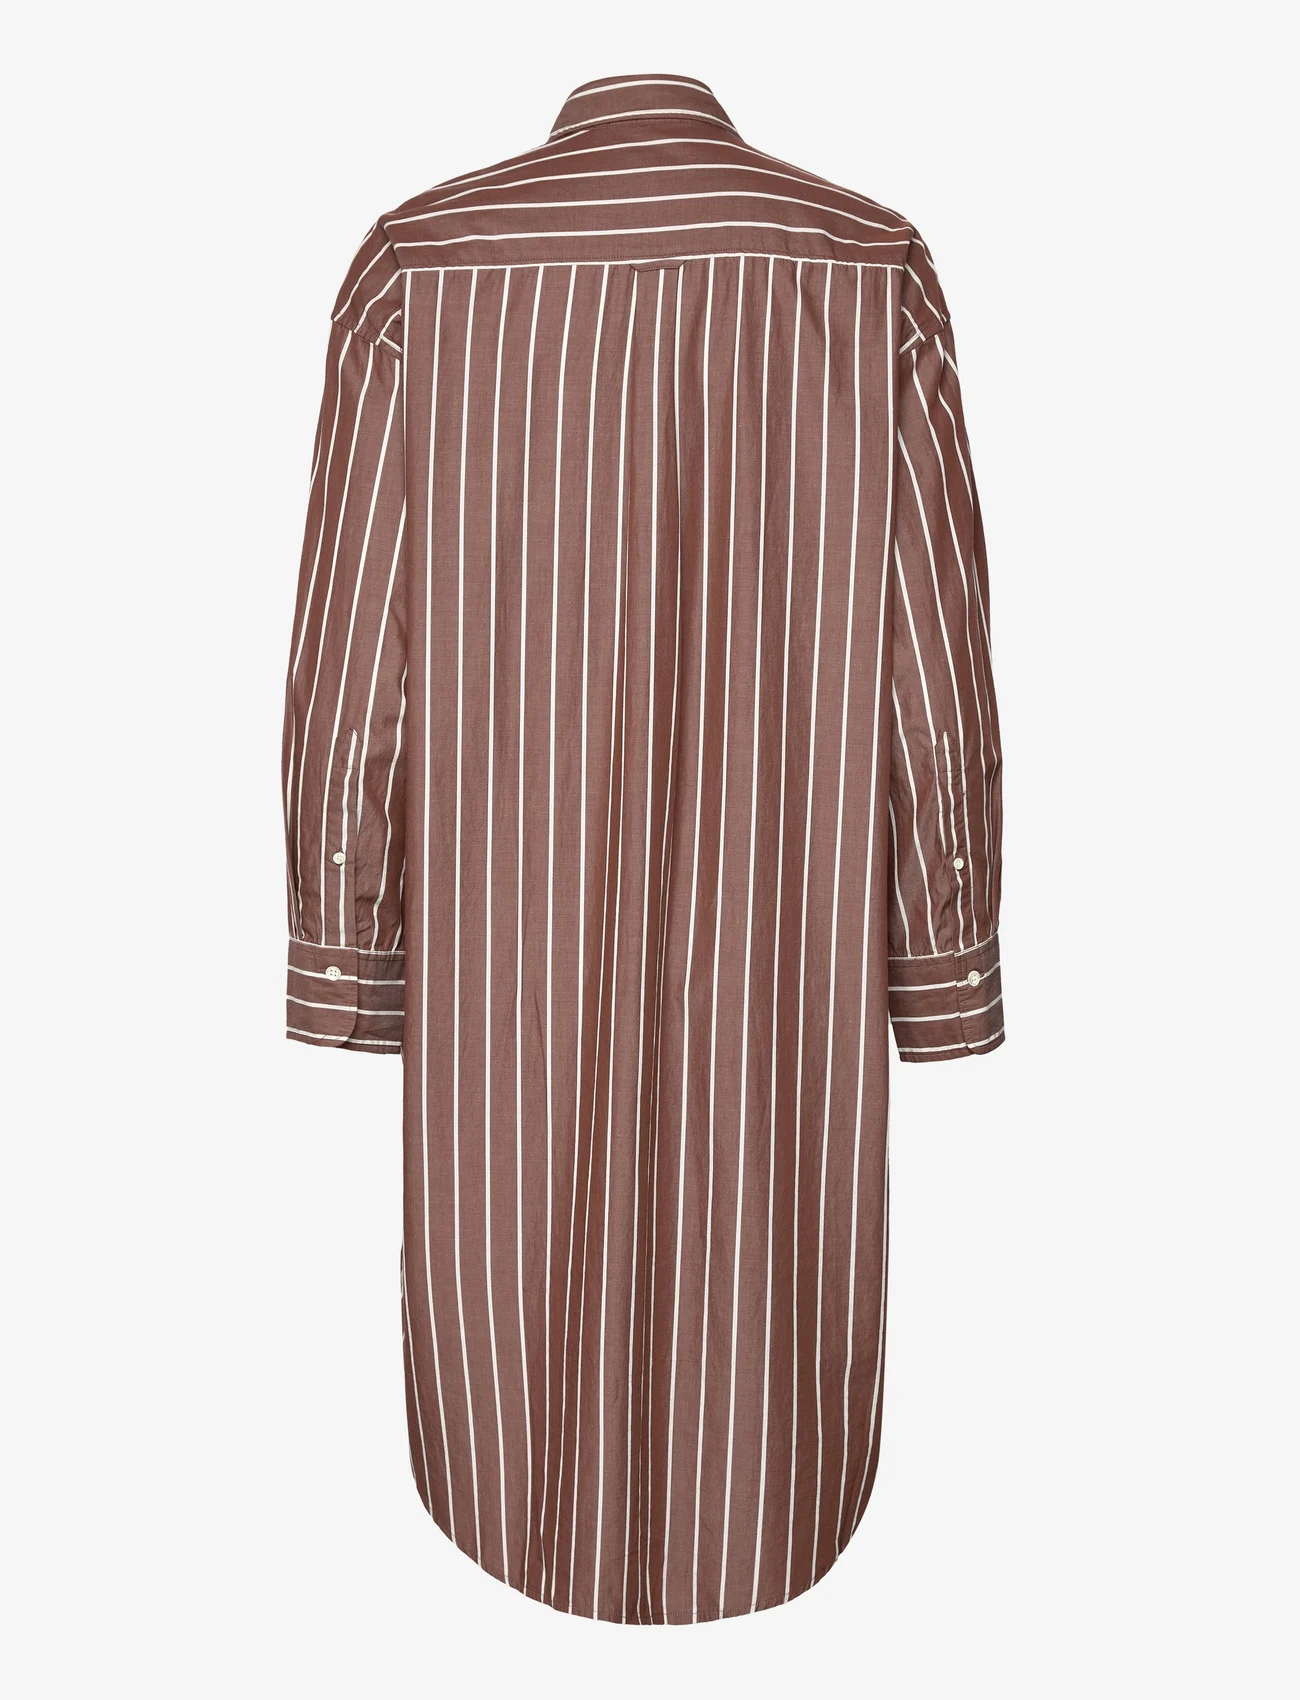 GANT - OS STRIPED SHIRT DRESS - kreklkleitas - mahogany brown - 1